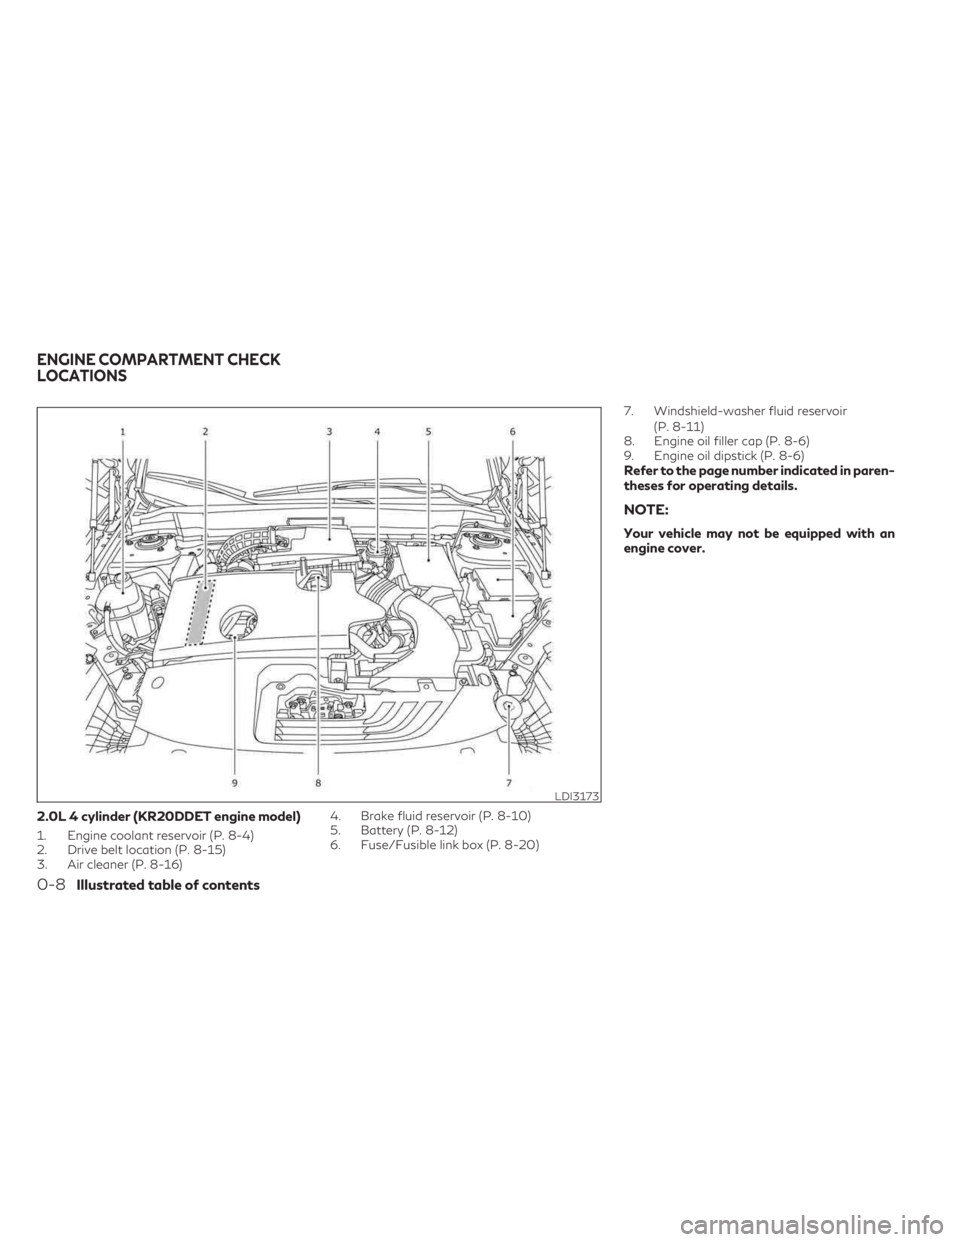 INFINITI QX55 2023  Owners Manual 2.0L 4 cylinder (KR20DDET engine model)
1. Engine coolant reservoir (P. 8-4)
2. Drive belt location (P. 8-15)
3. Air cleaner (P. 8-16)4. Brake fluid reservoir (P. 8-10)
5. Battery (P. 8-12)
6. Fuse/Fu